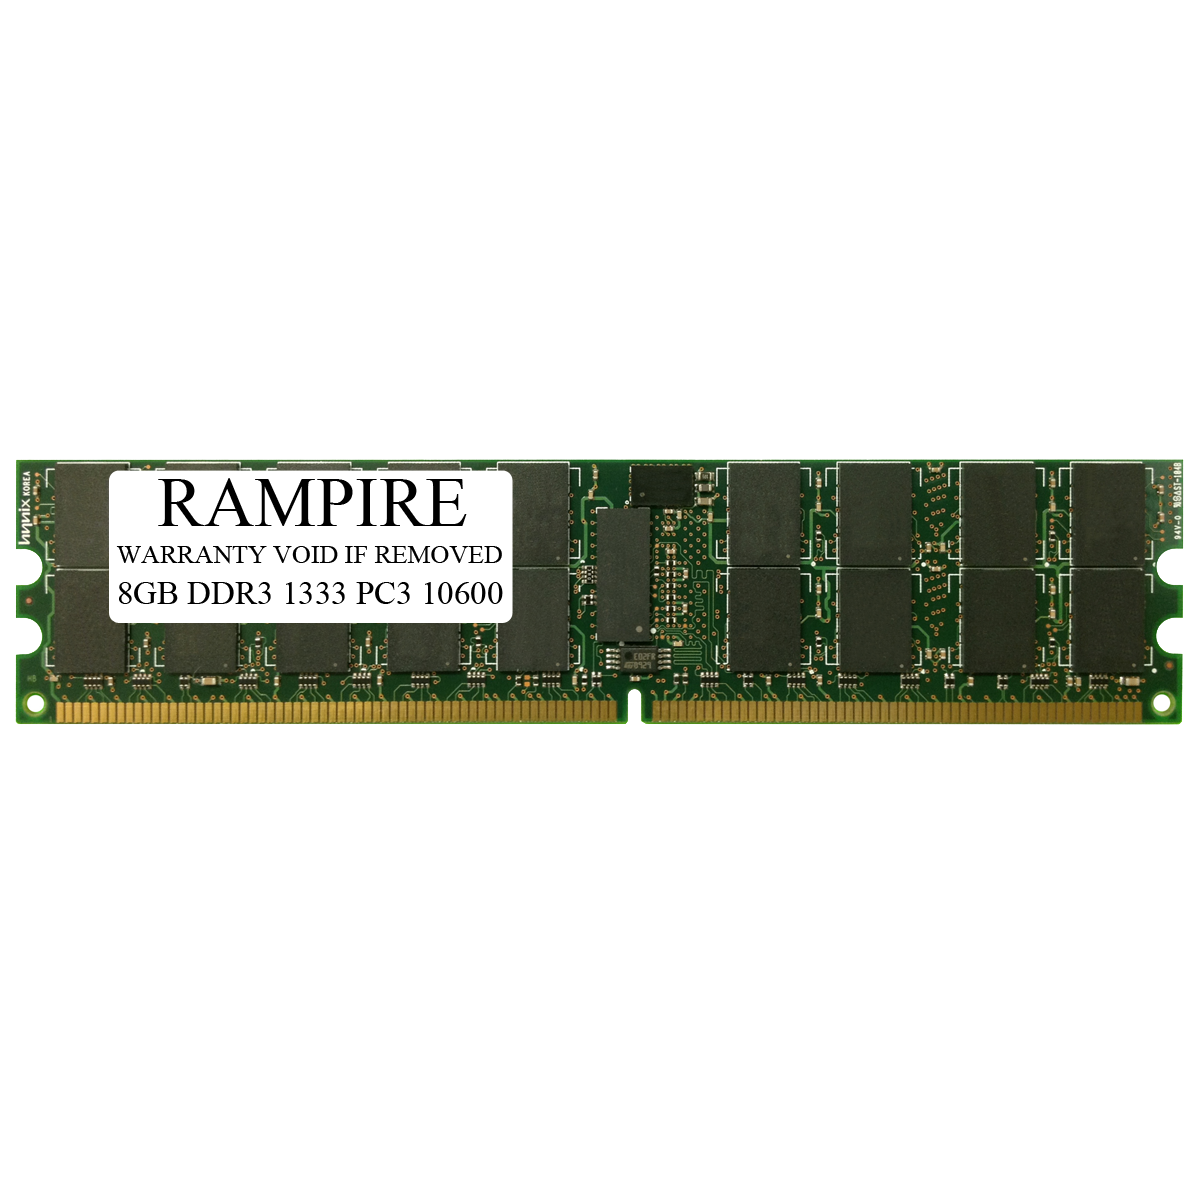 RAMPIRE 8GB DDR3 1333 (PC3 10600) 240-Pin SDRAM 2Rx4 Standard Profile 1.5V ECC Registered Server Memory